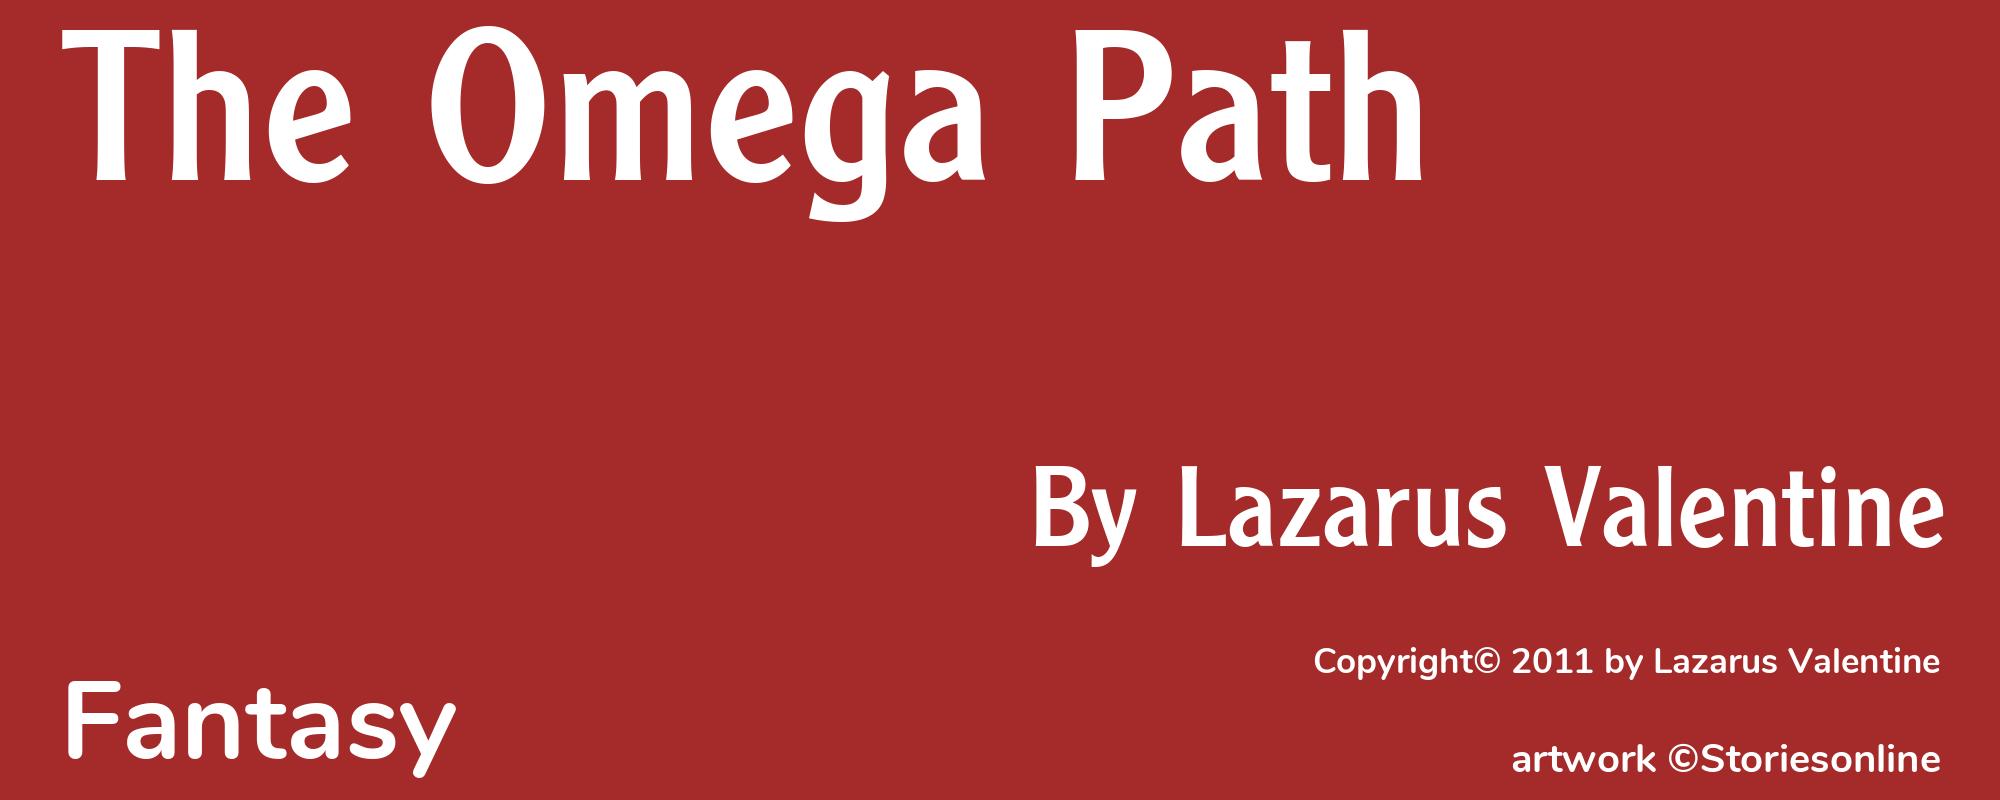 The Omega Path - Cover